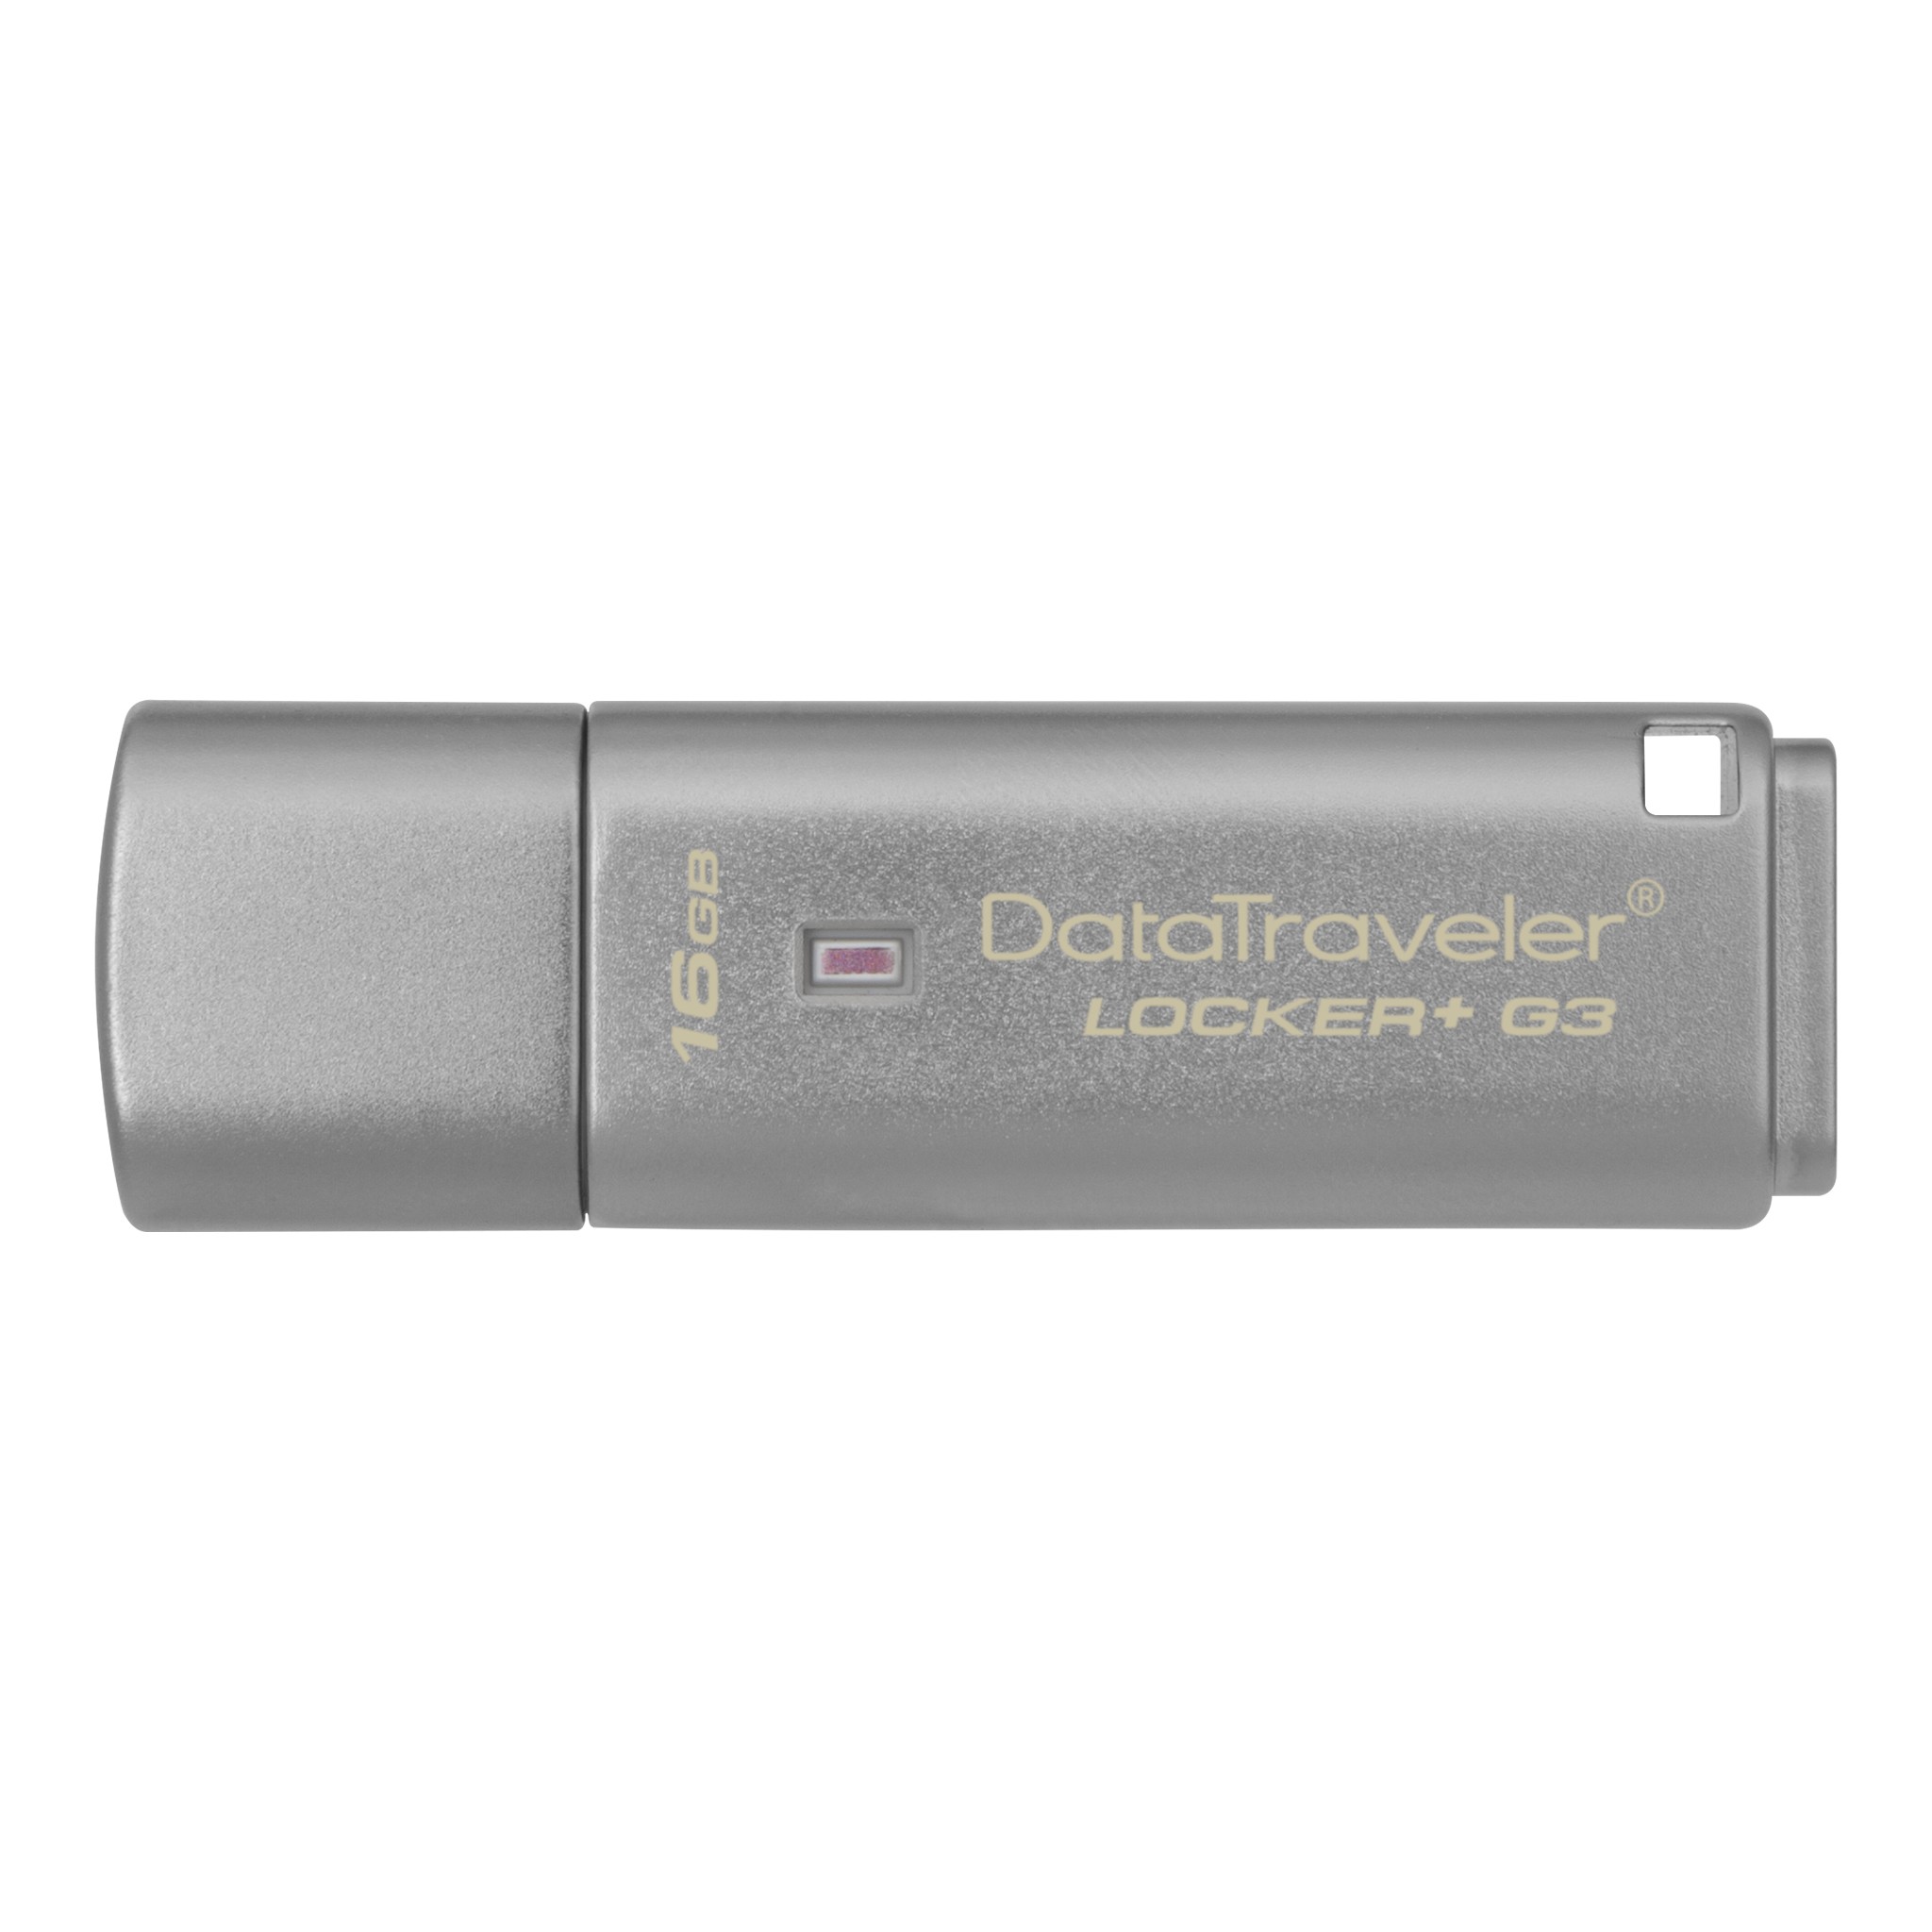 USB Bảo Mật Kingston DataTraveler Locker+ Gen 3 - DTLPG3/16GB - Hàng chính hãng